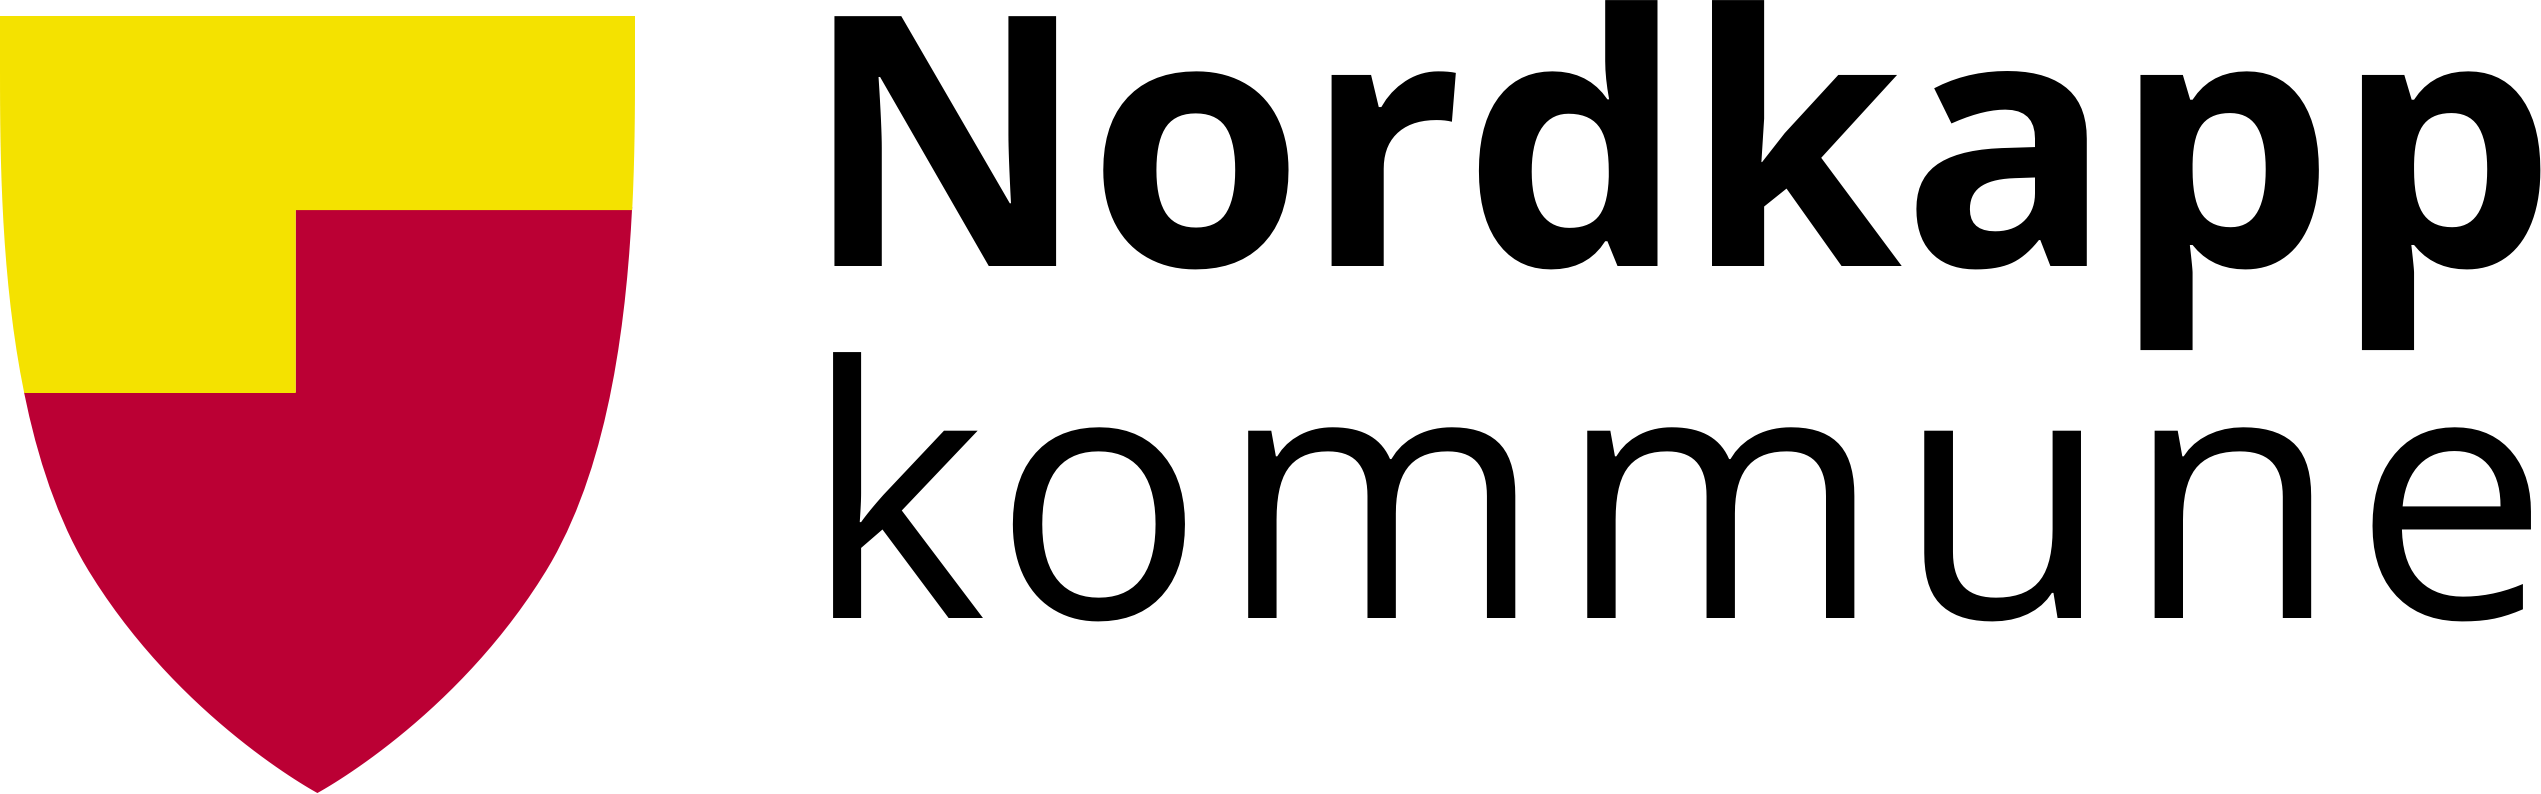 Nordkapp kommune logo